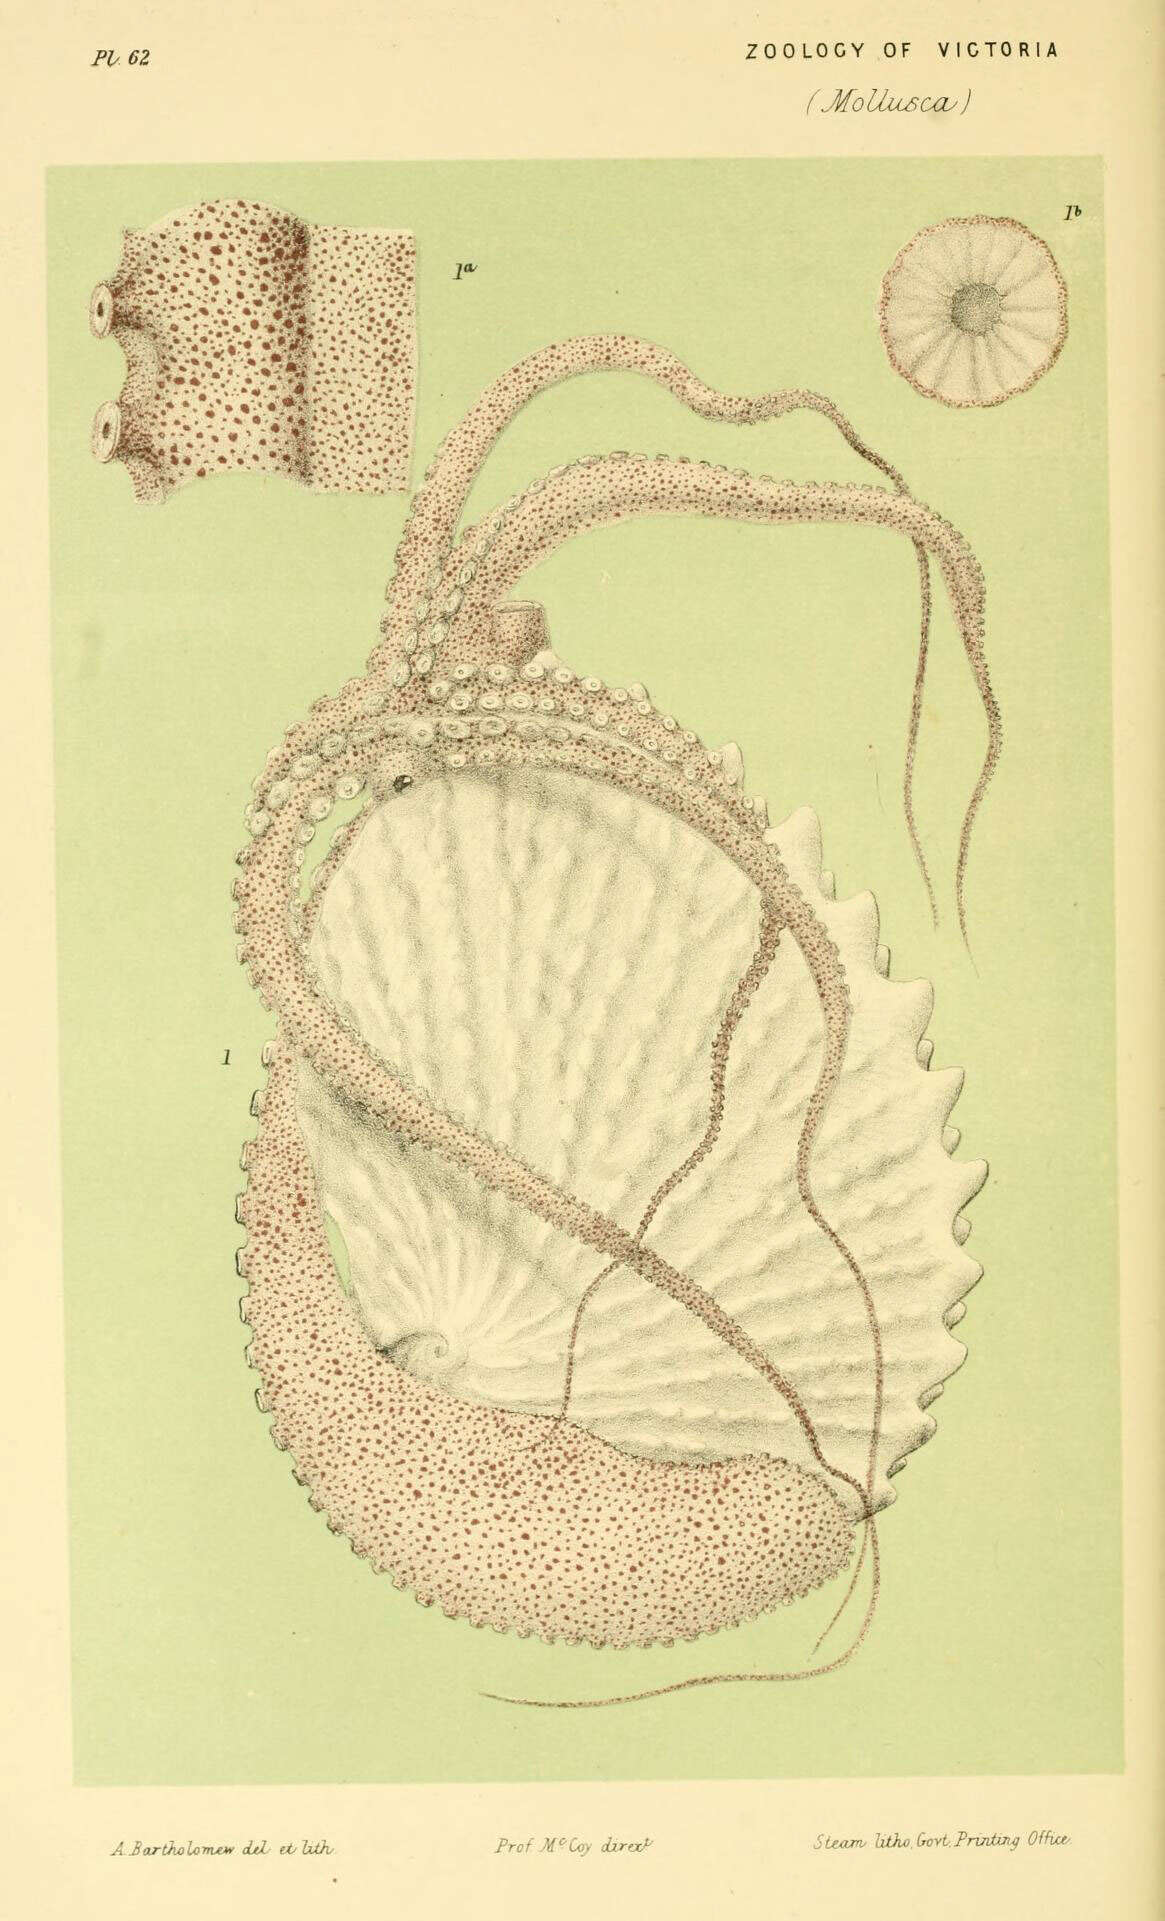 Image of Argonauta nodosus Lightfoot 1786